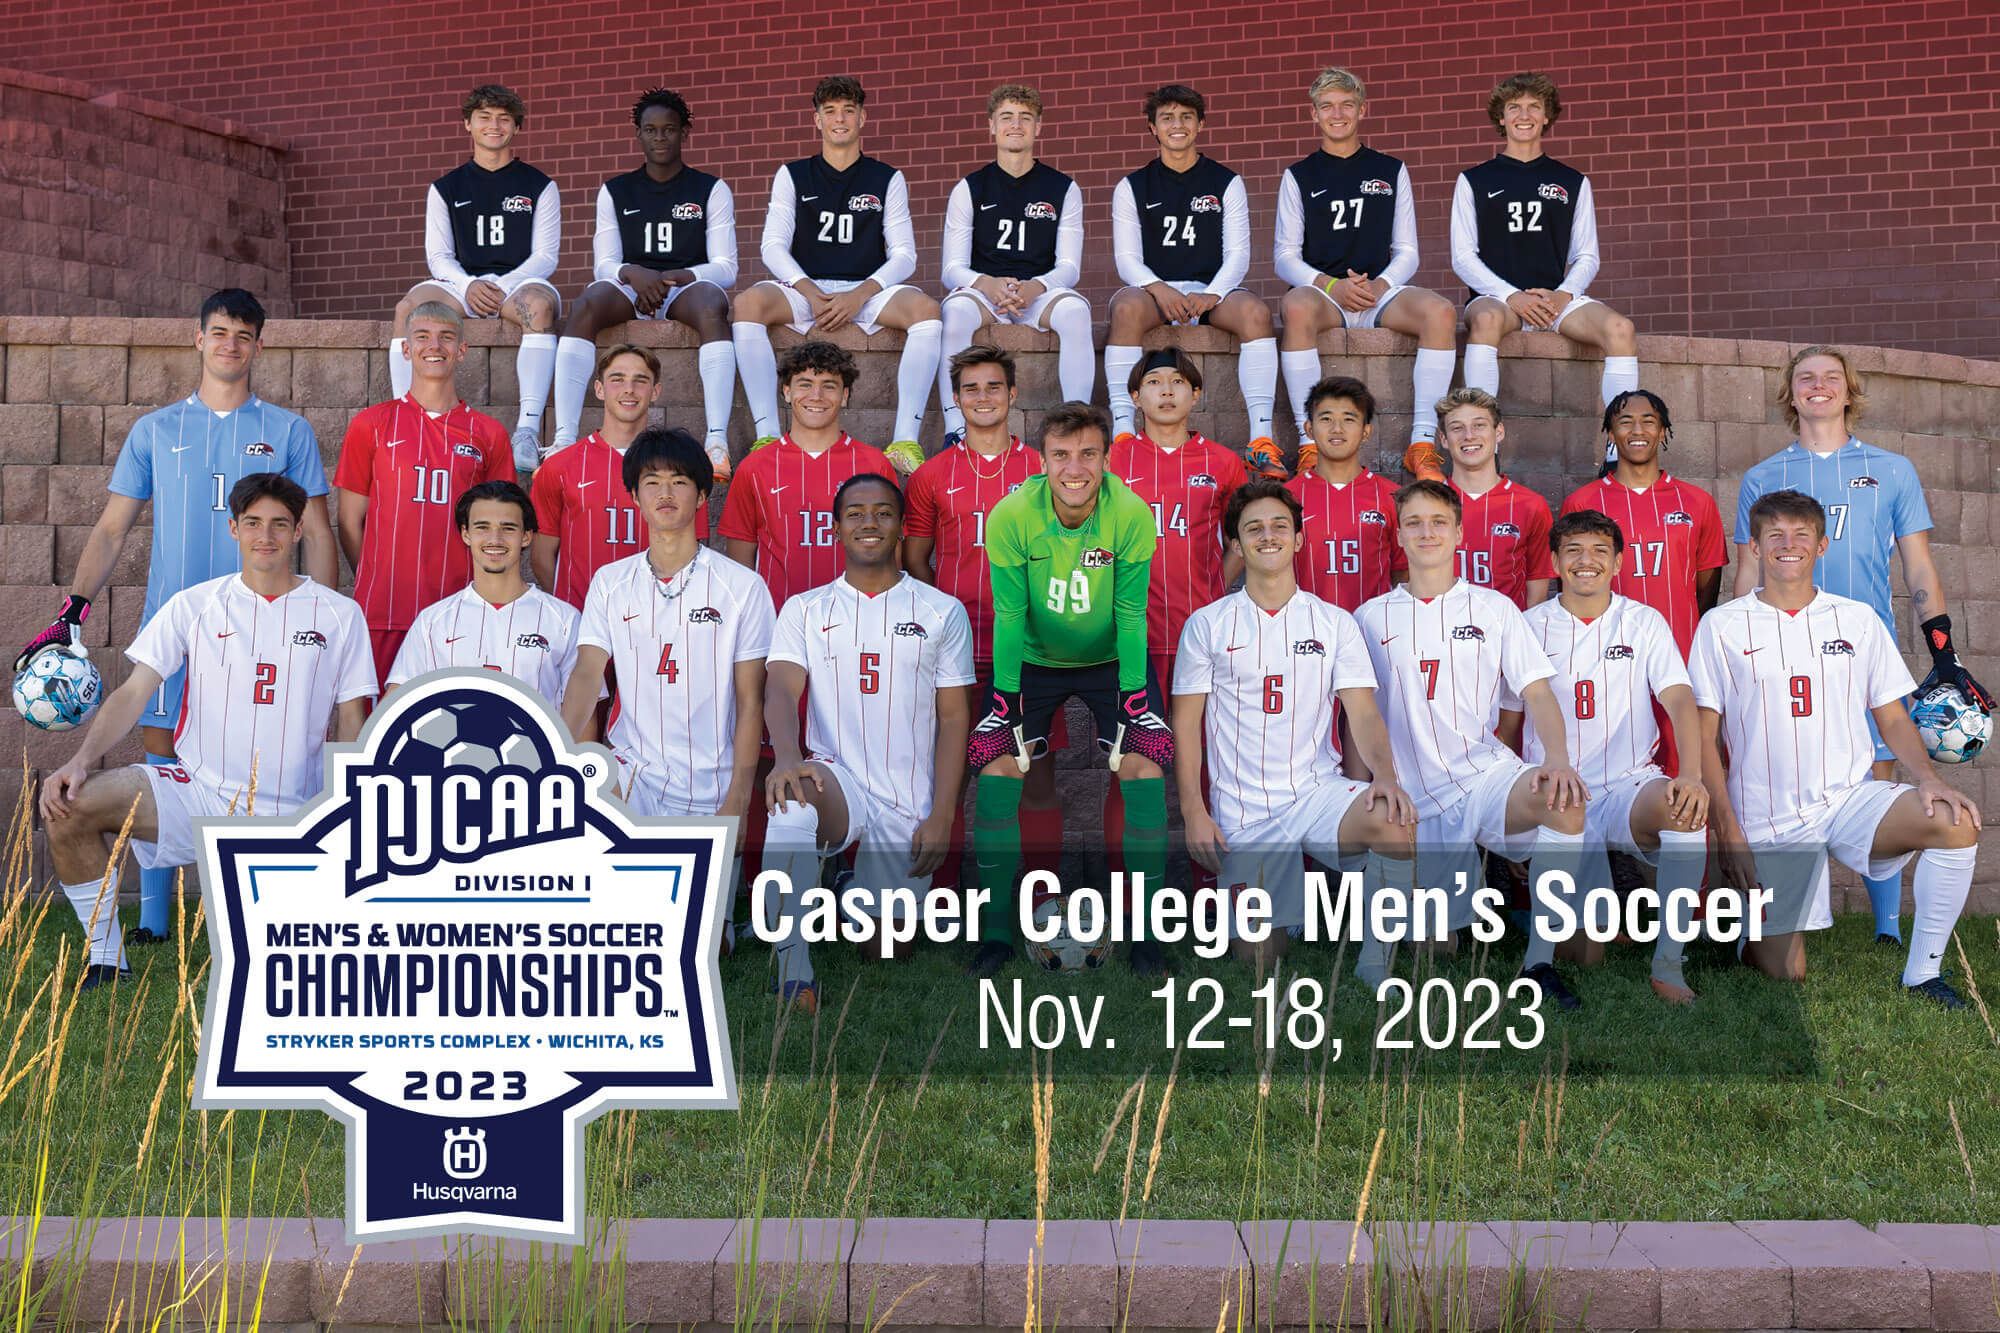 Image for CC Men's Soccer Tournament press release.